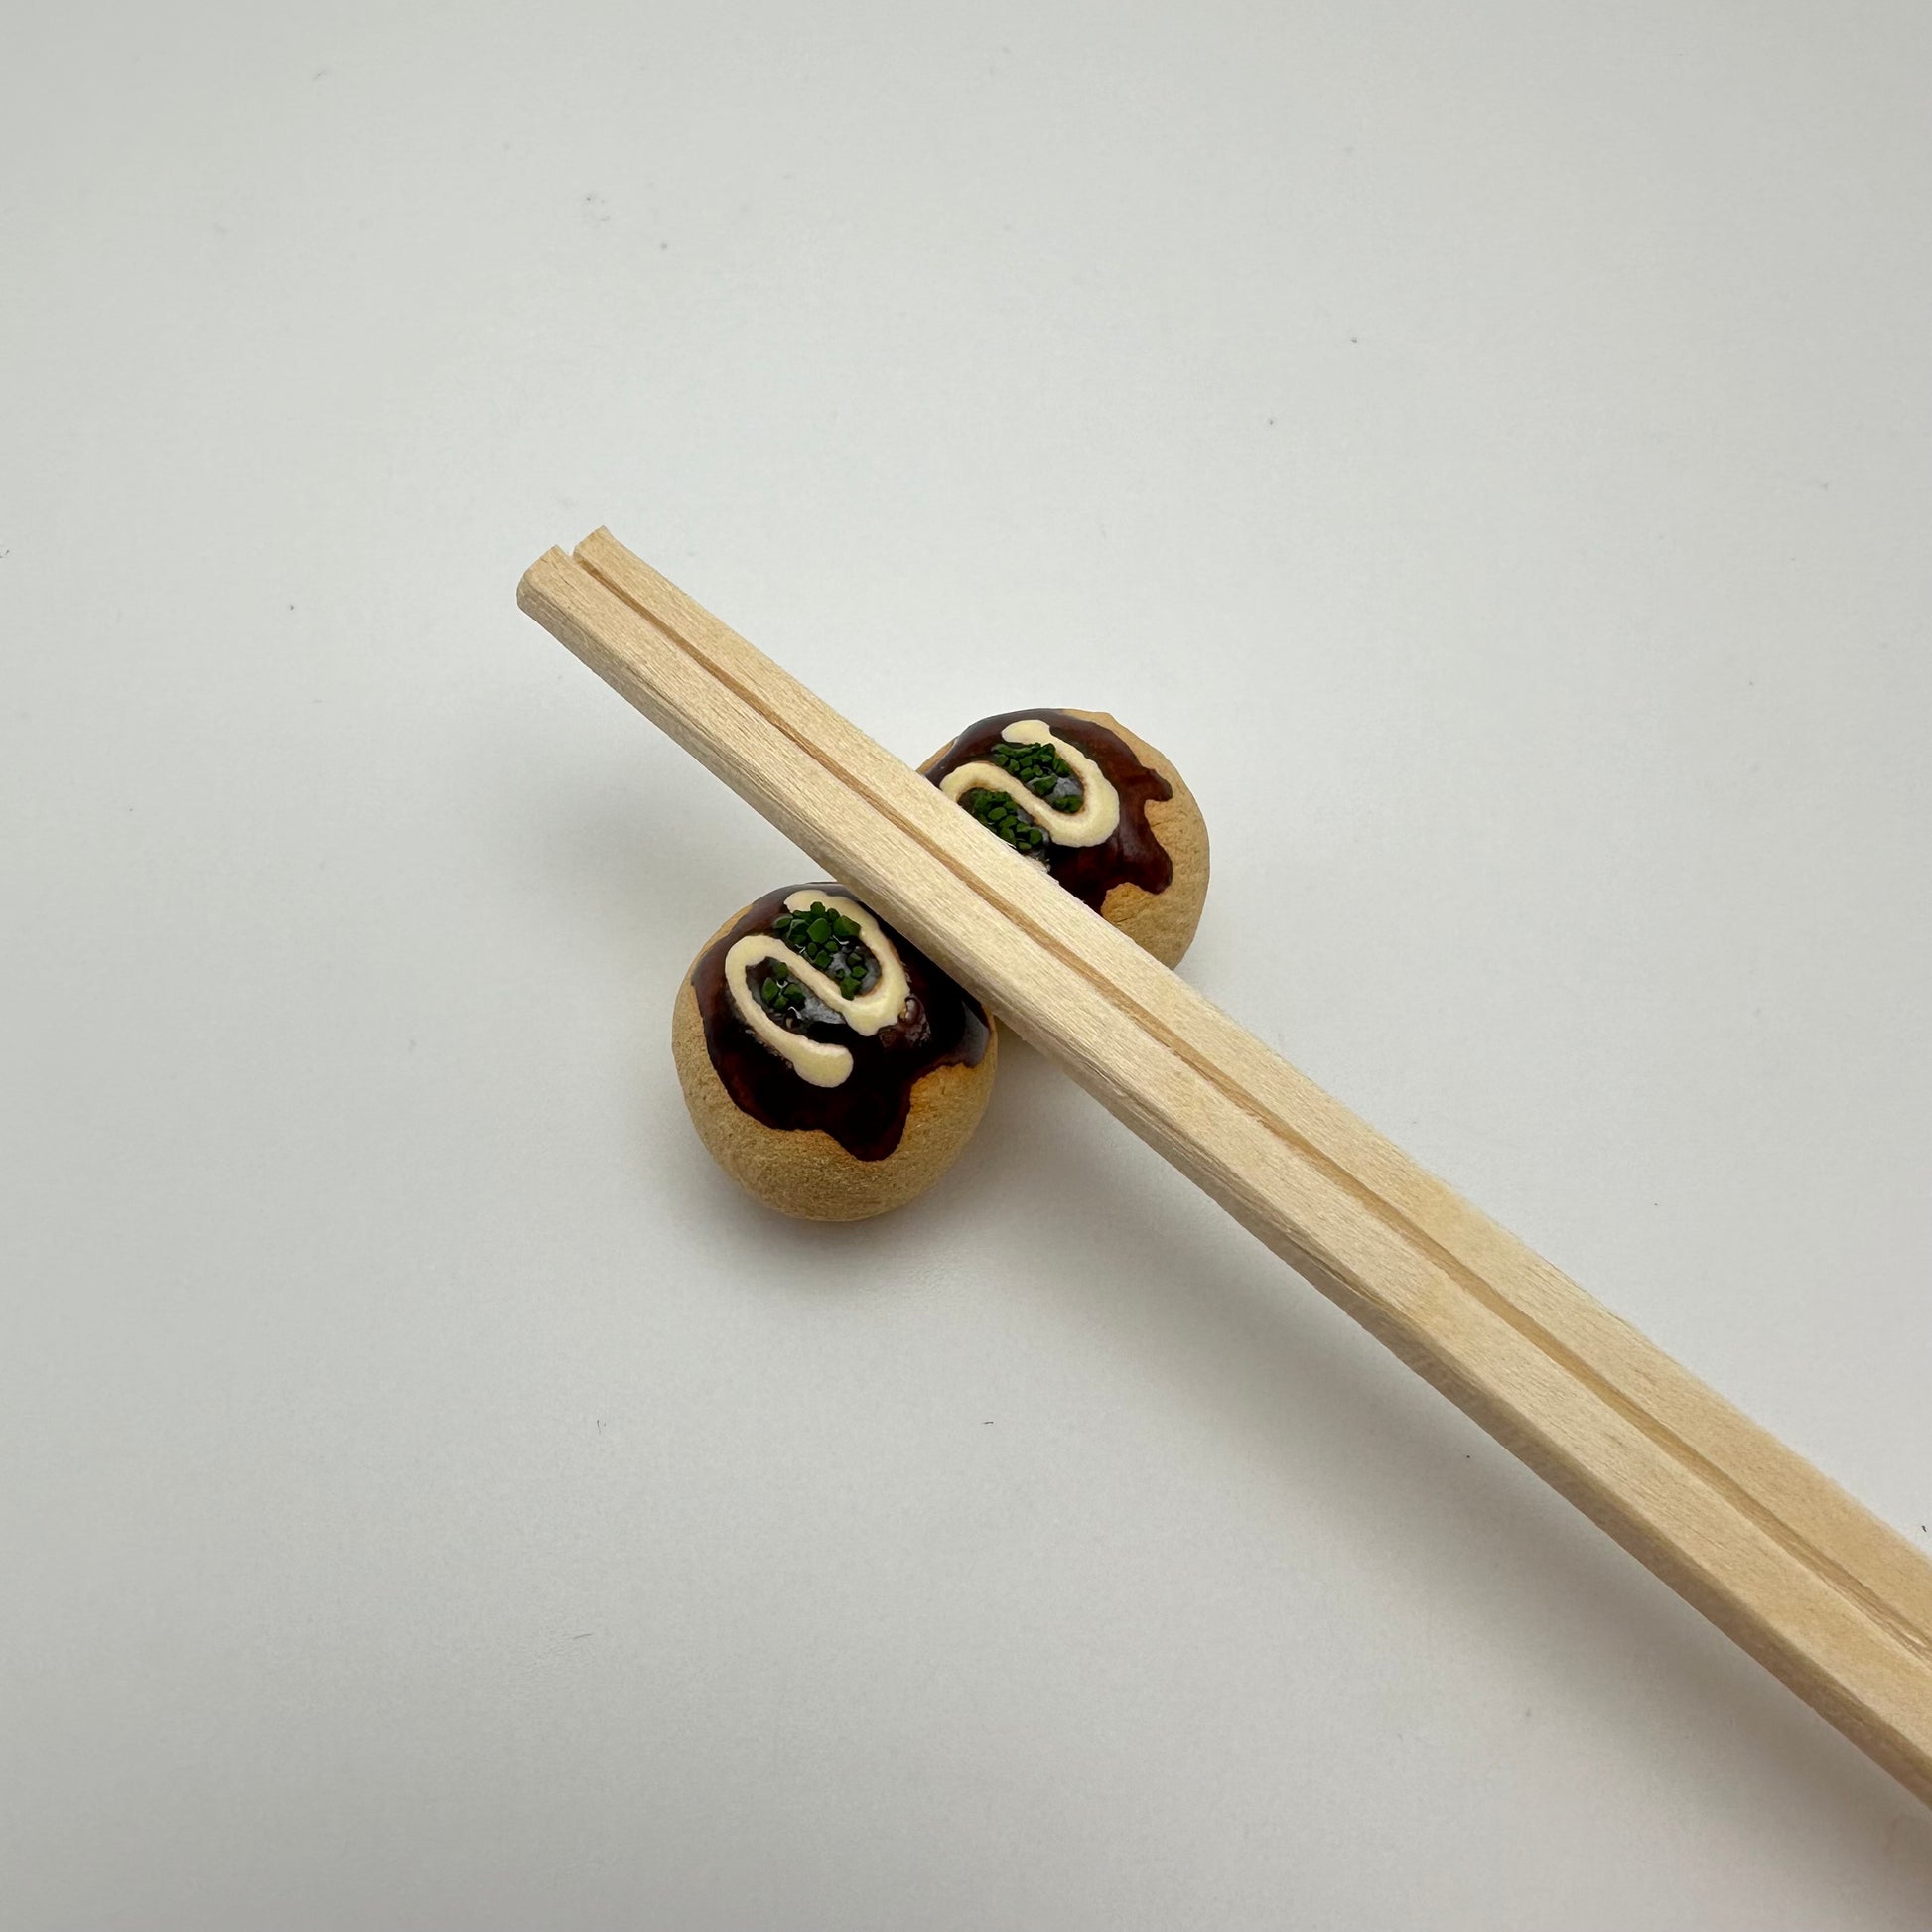 Takoyaki chopstick holders with chopsticks on top.